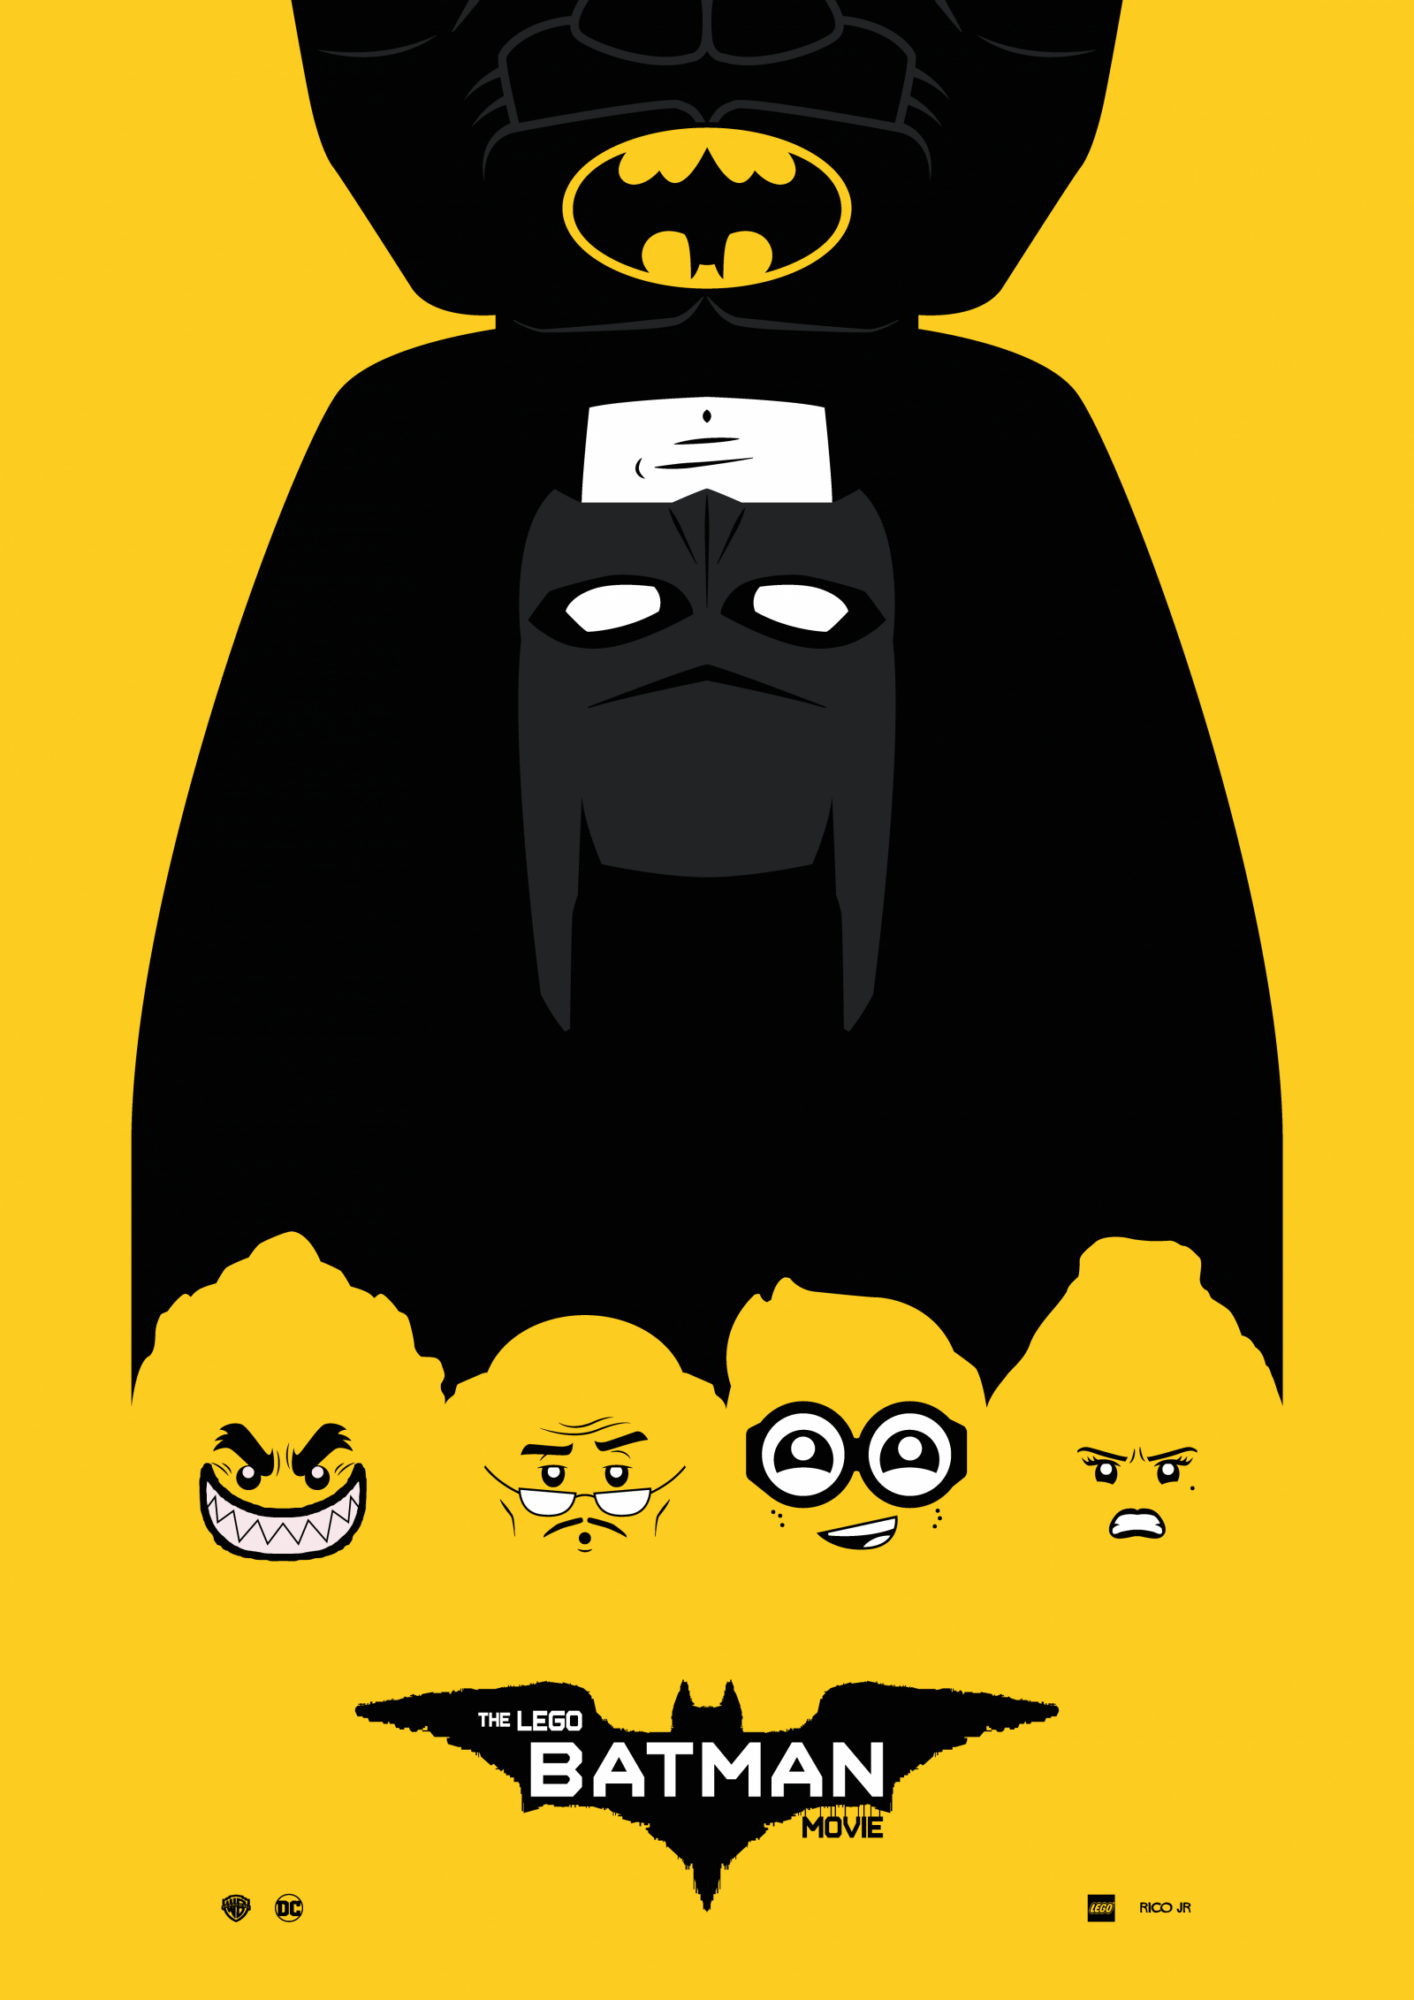 LEGO BATMAN MOVIE Poster Art - PosterSpy